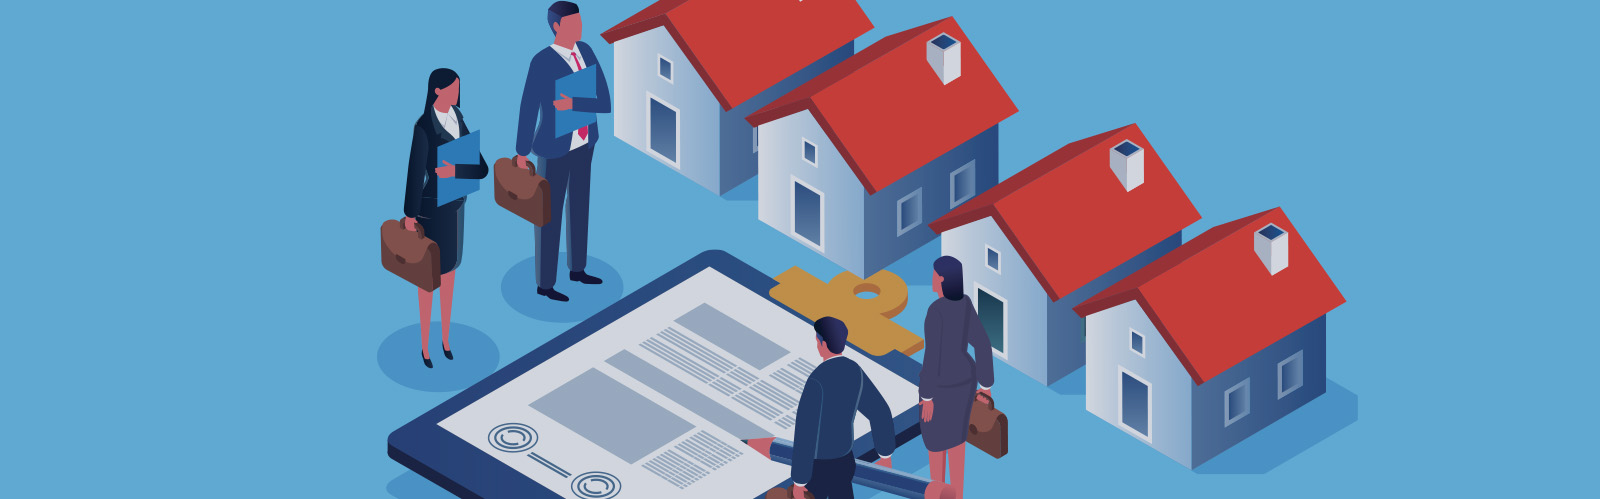 How to Choose a Mortgage Lender | Austin Telco FCU